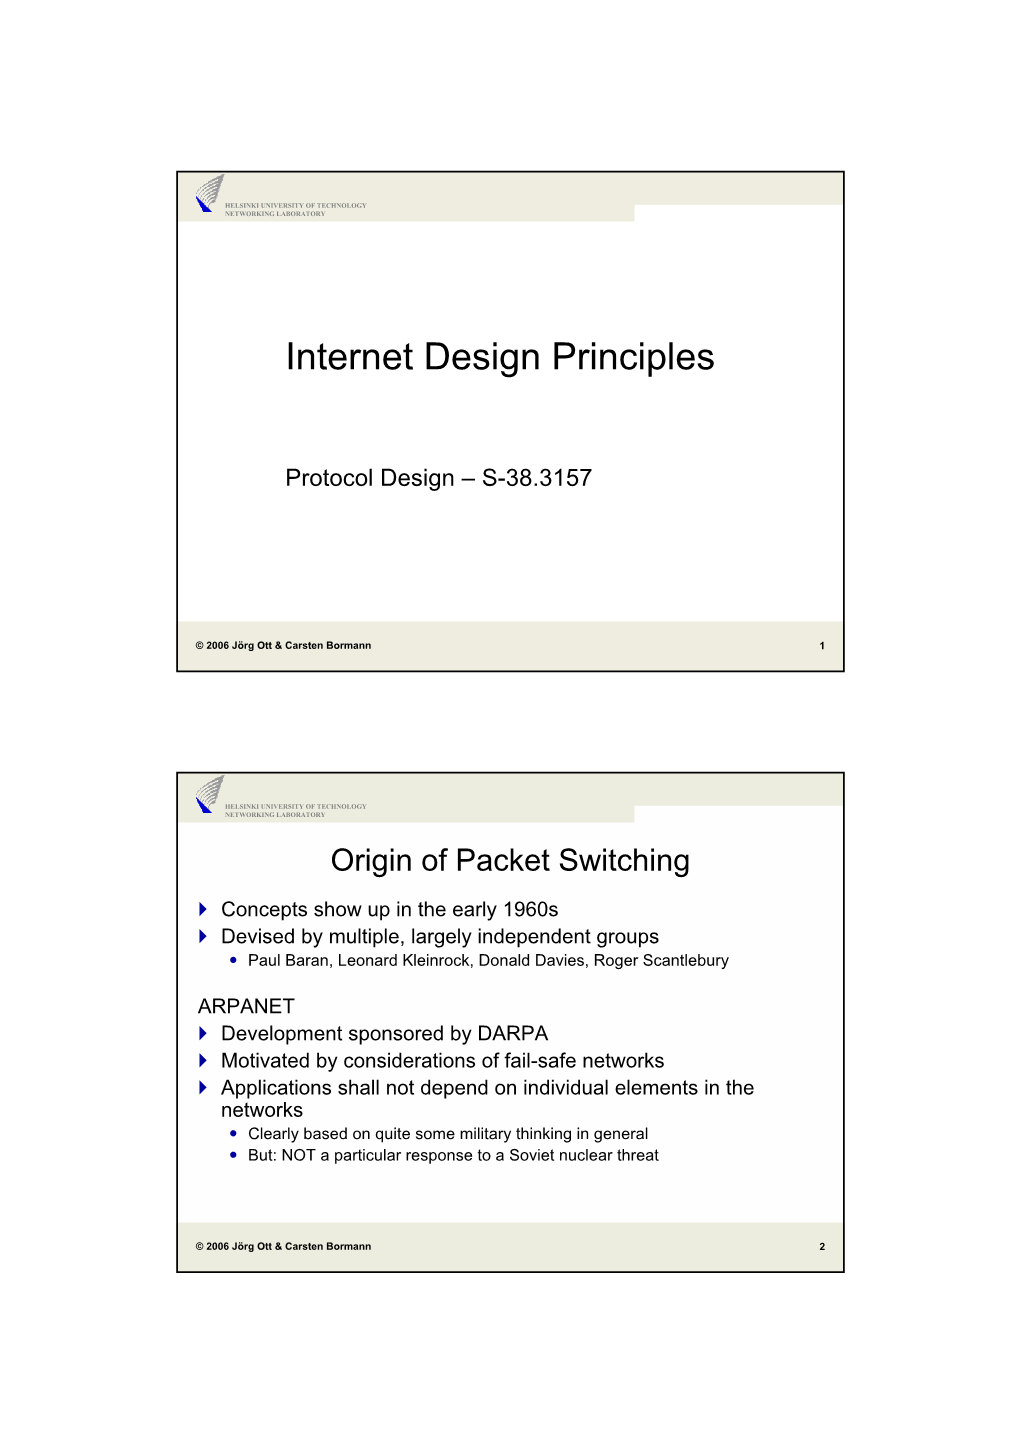 Internet Design Principles